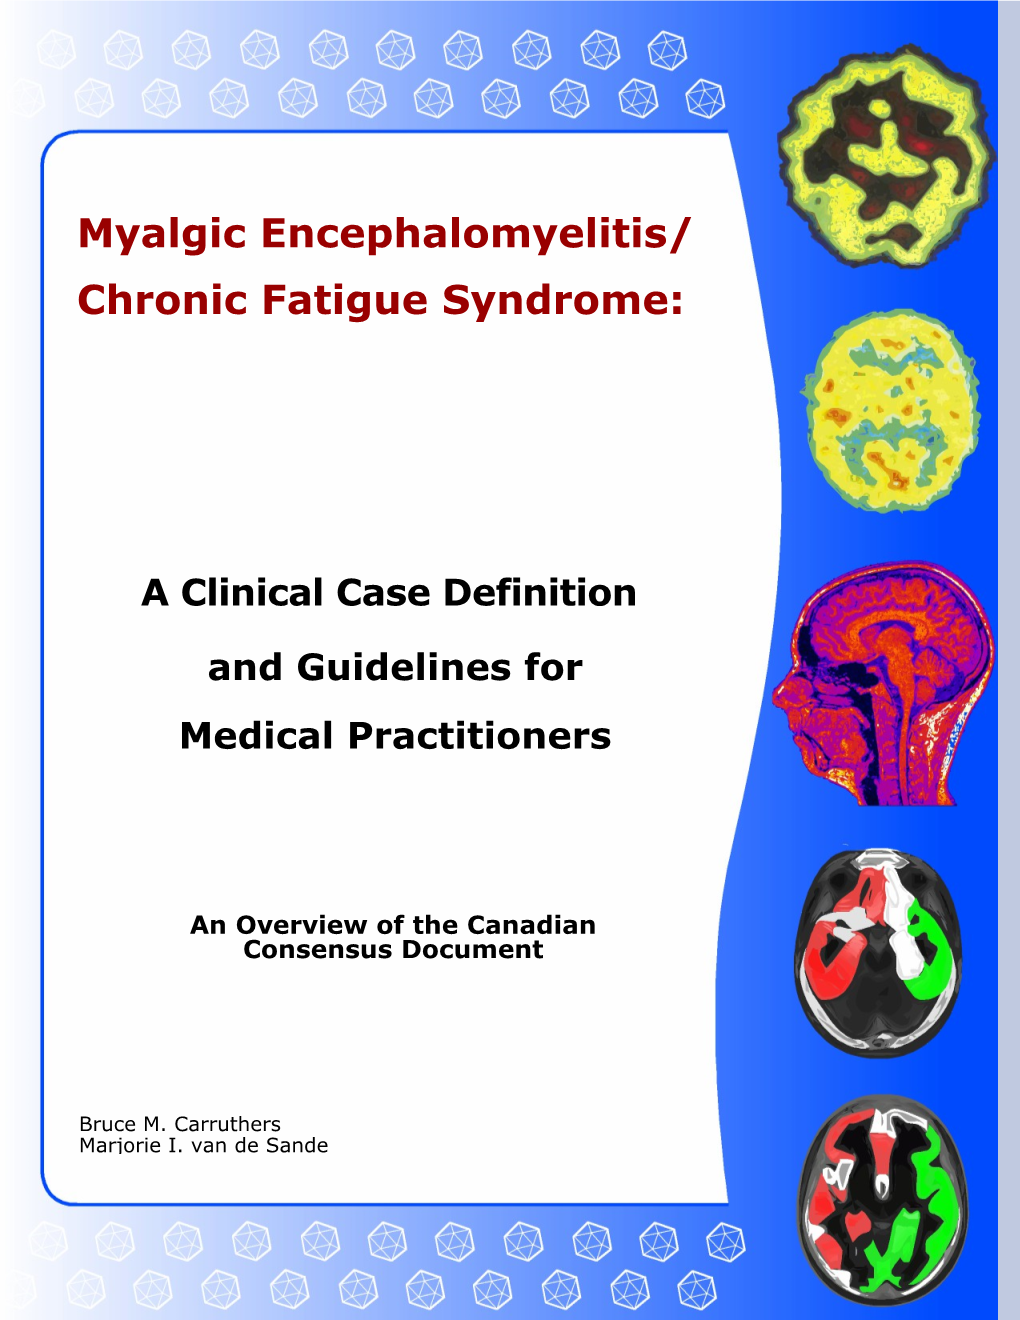 Myalgic Encephalomyelitis/Chronic Fatigue Syndrome: a Clinical Case Definition and Guidelines